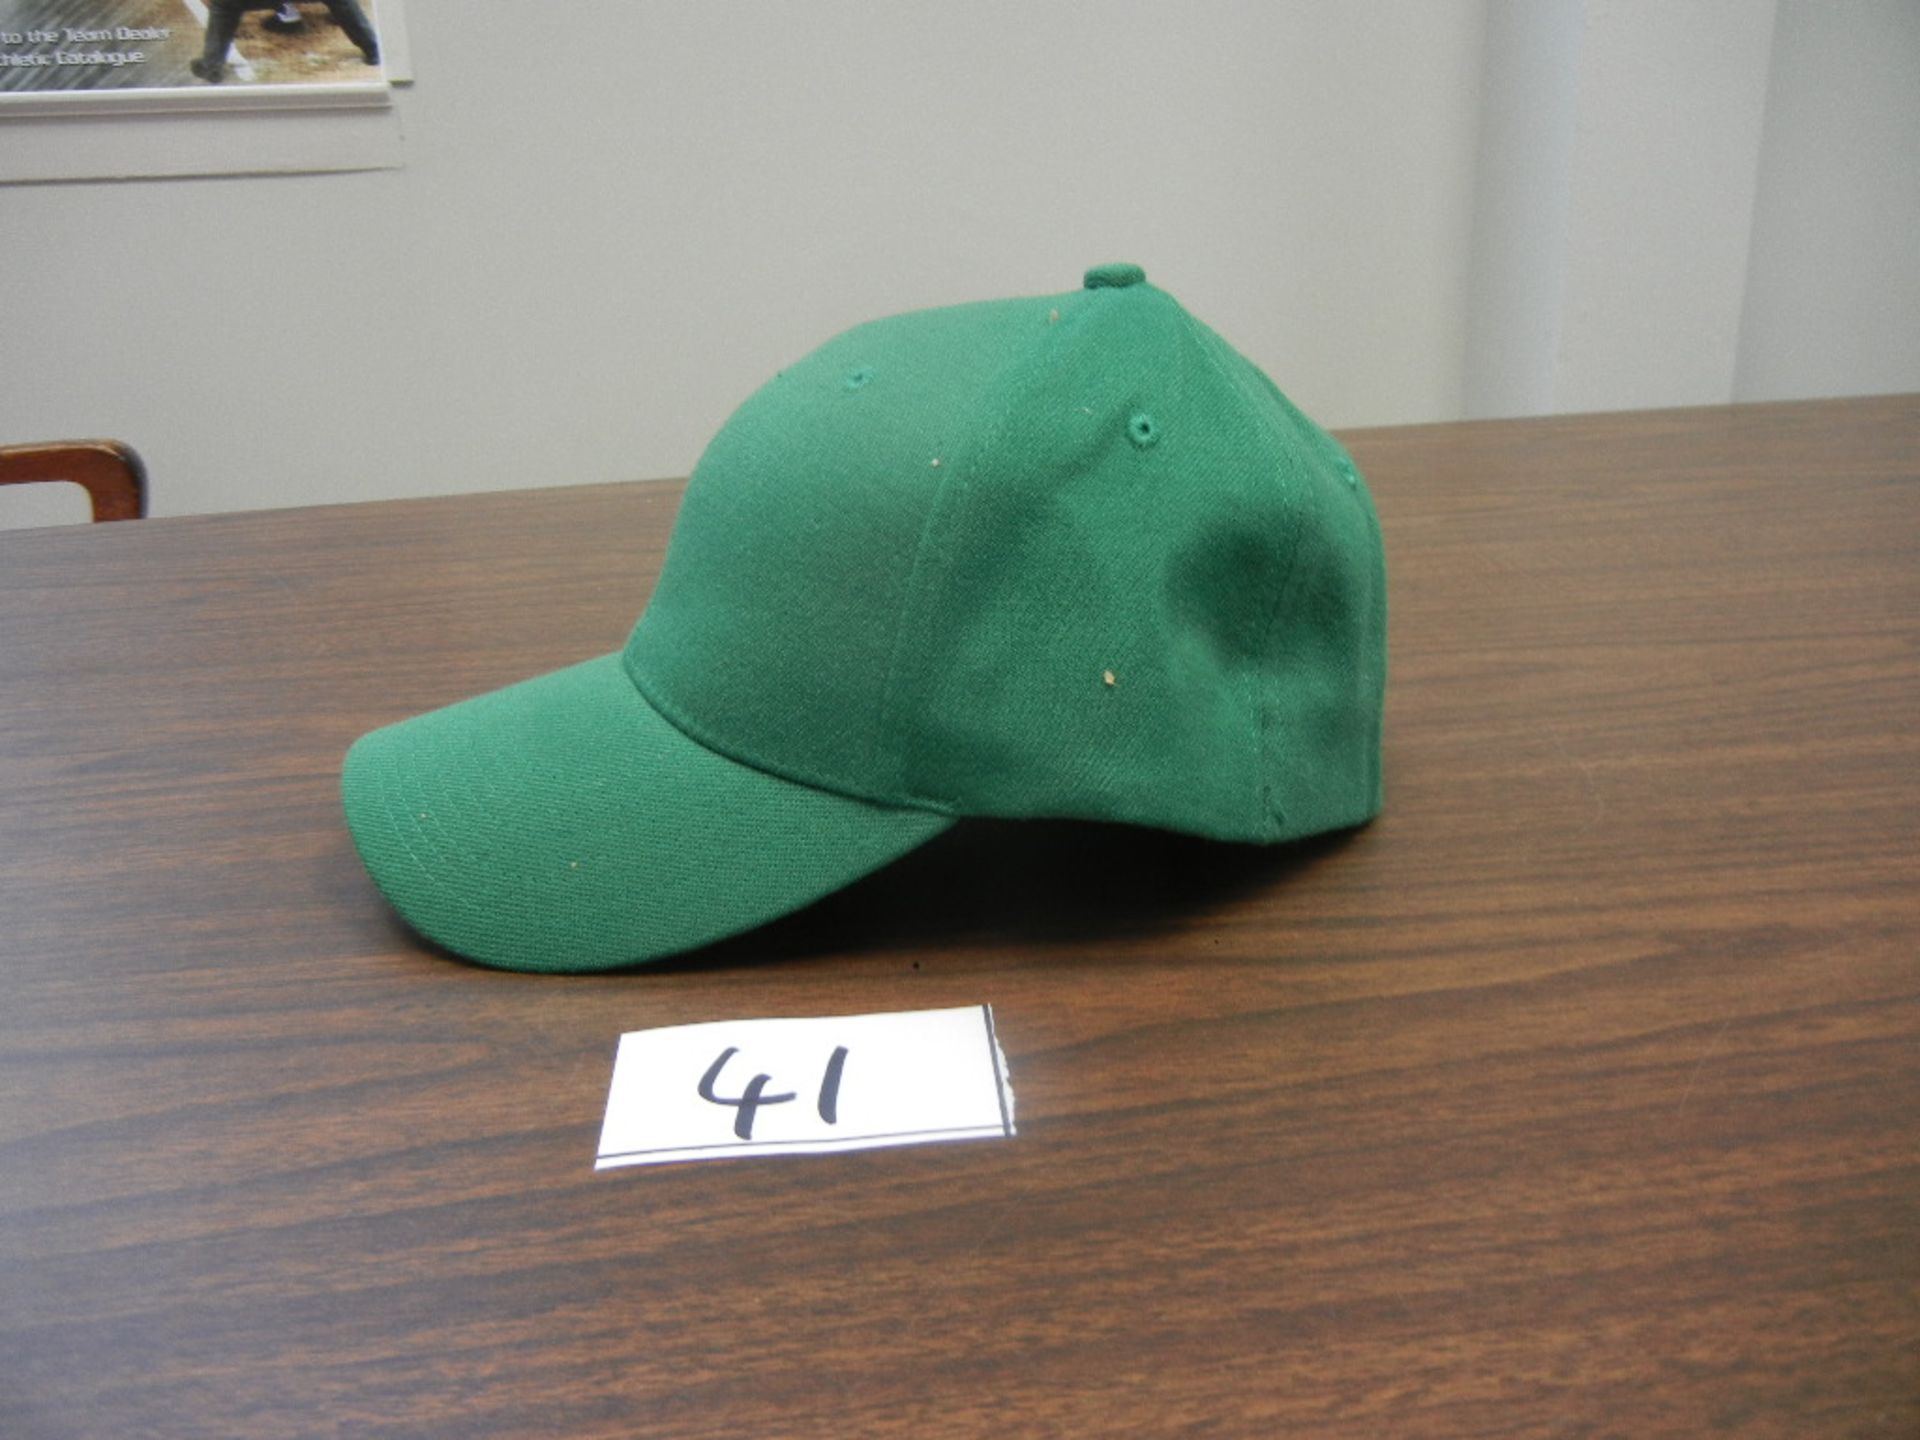 Wool Blend Stretch Fit cap, 6 Panel, with US Patent 24 hats/case, 3cs s/m, 3cs m/l, 3cs l/xl Kelly